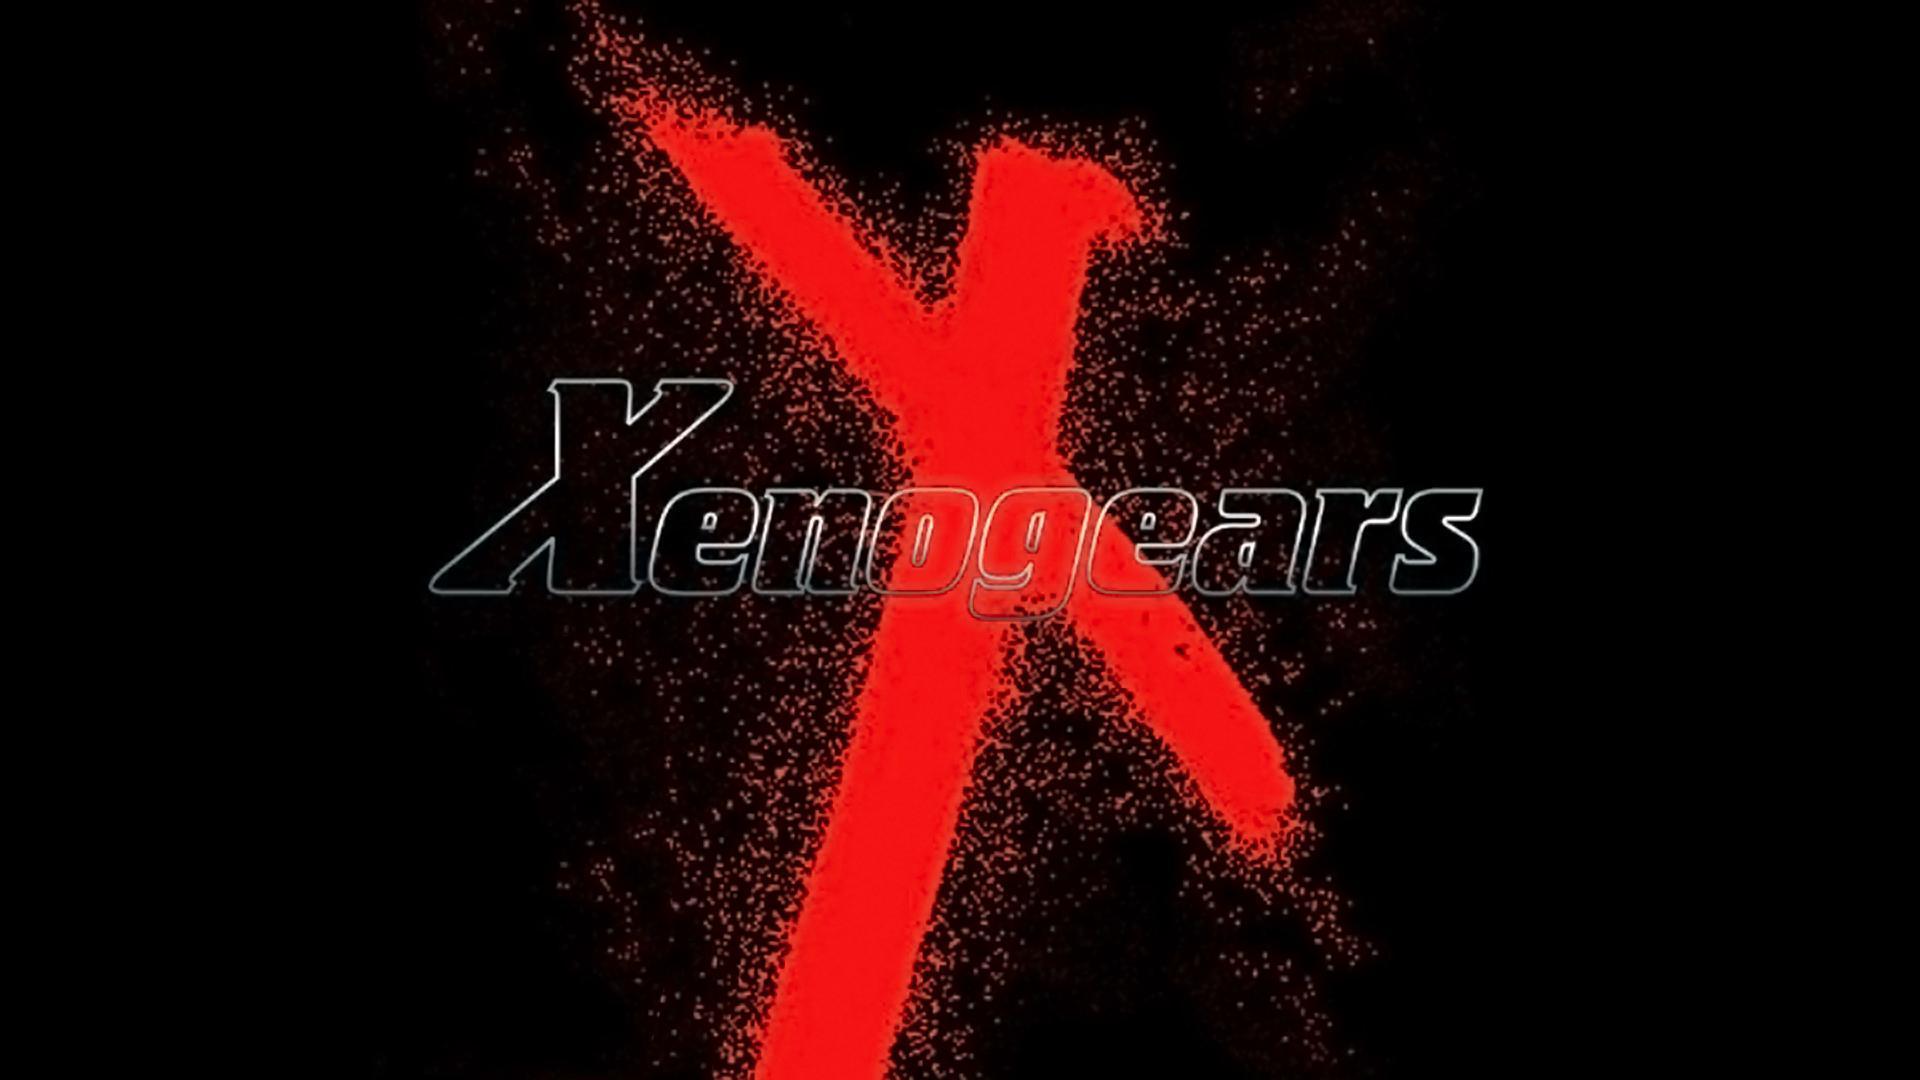 Xenogears Wallpaper 1920x1080